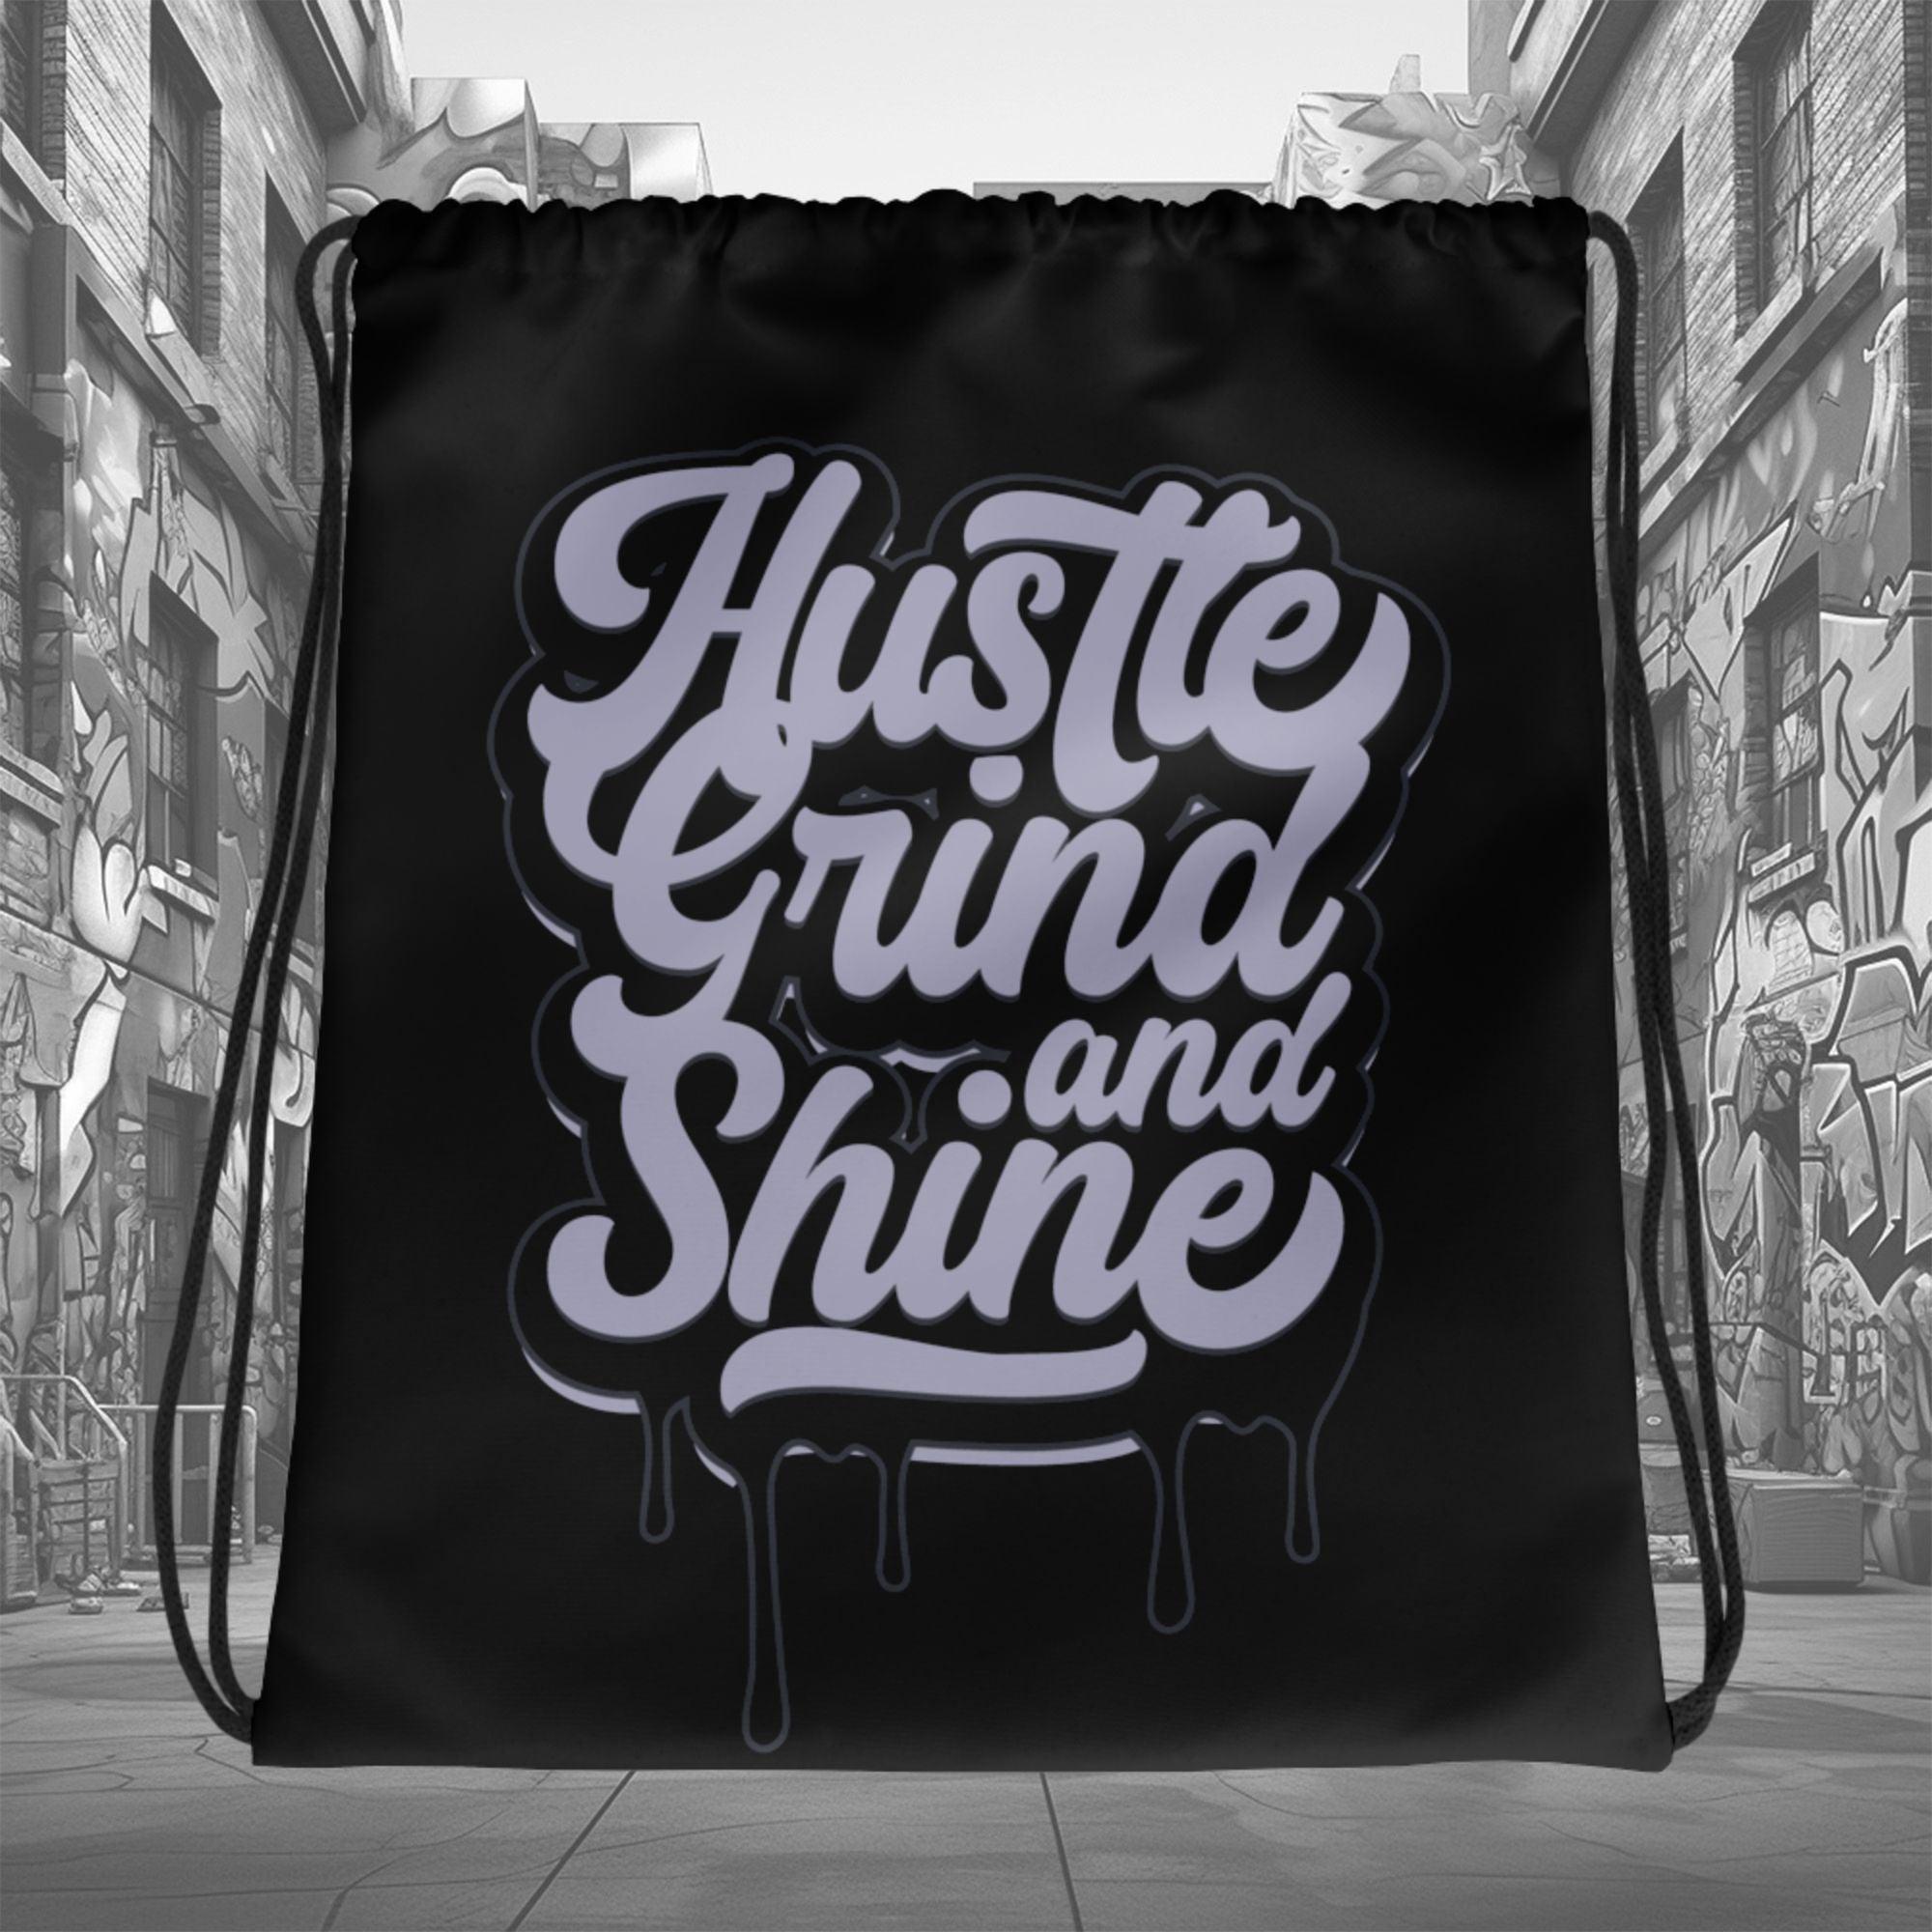 Amazing Black Hustle Grind and Shine Drawstring Bag Air Jordan 8 Winterized photo.